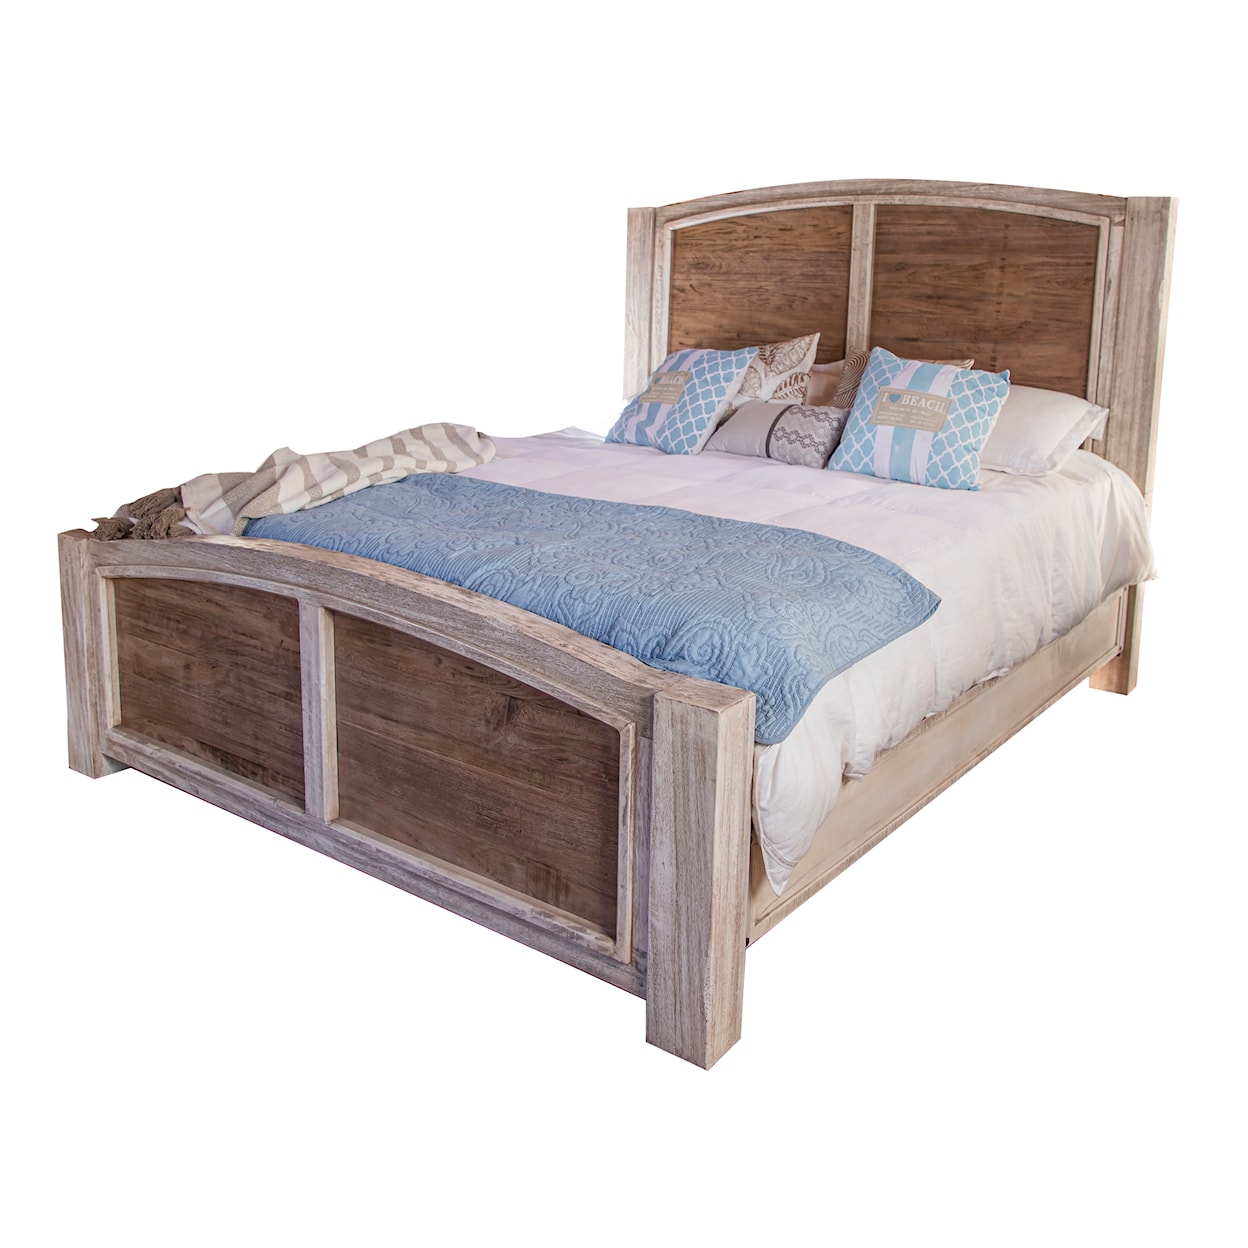 International Furniture Direct Sahara Queen Bed